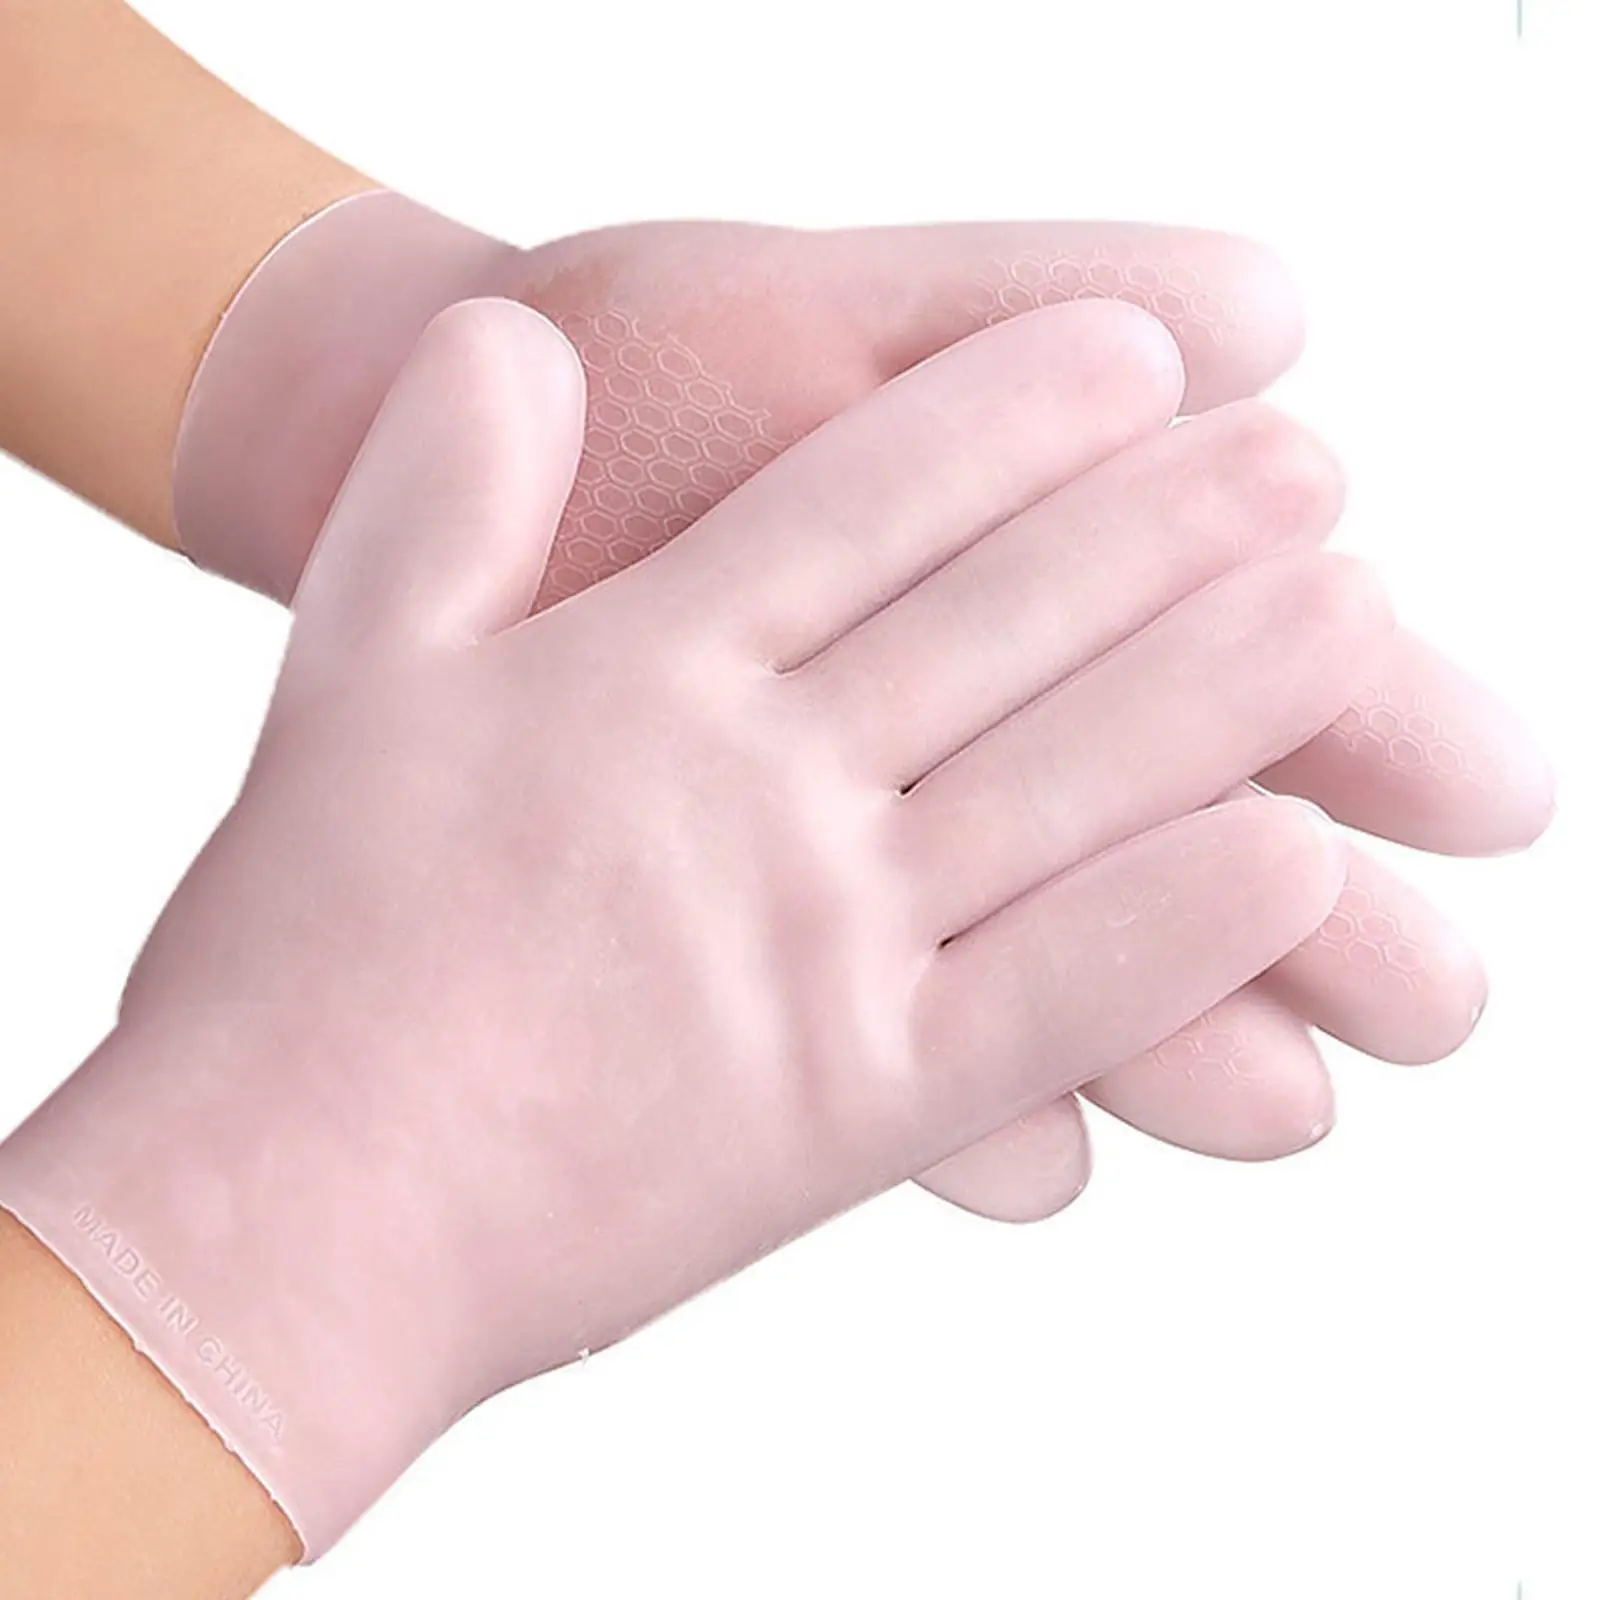 2x Moisturizing SPA Gloves Callus Remover Elastic Cuff Overnight Hand Care Gel Waterproof for Cuticles Dry Skin Eczema Women Men